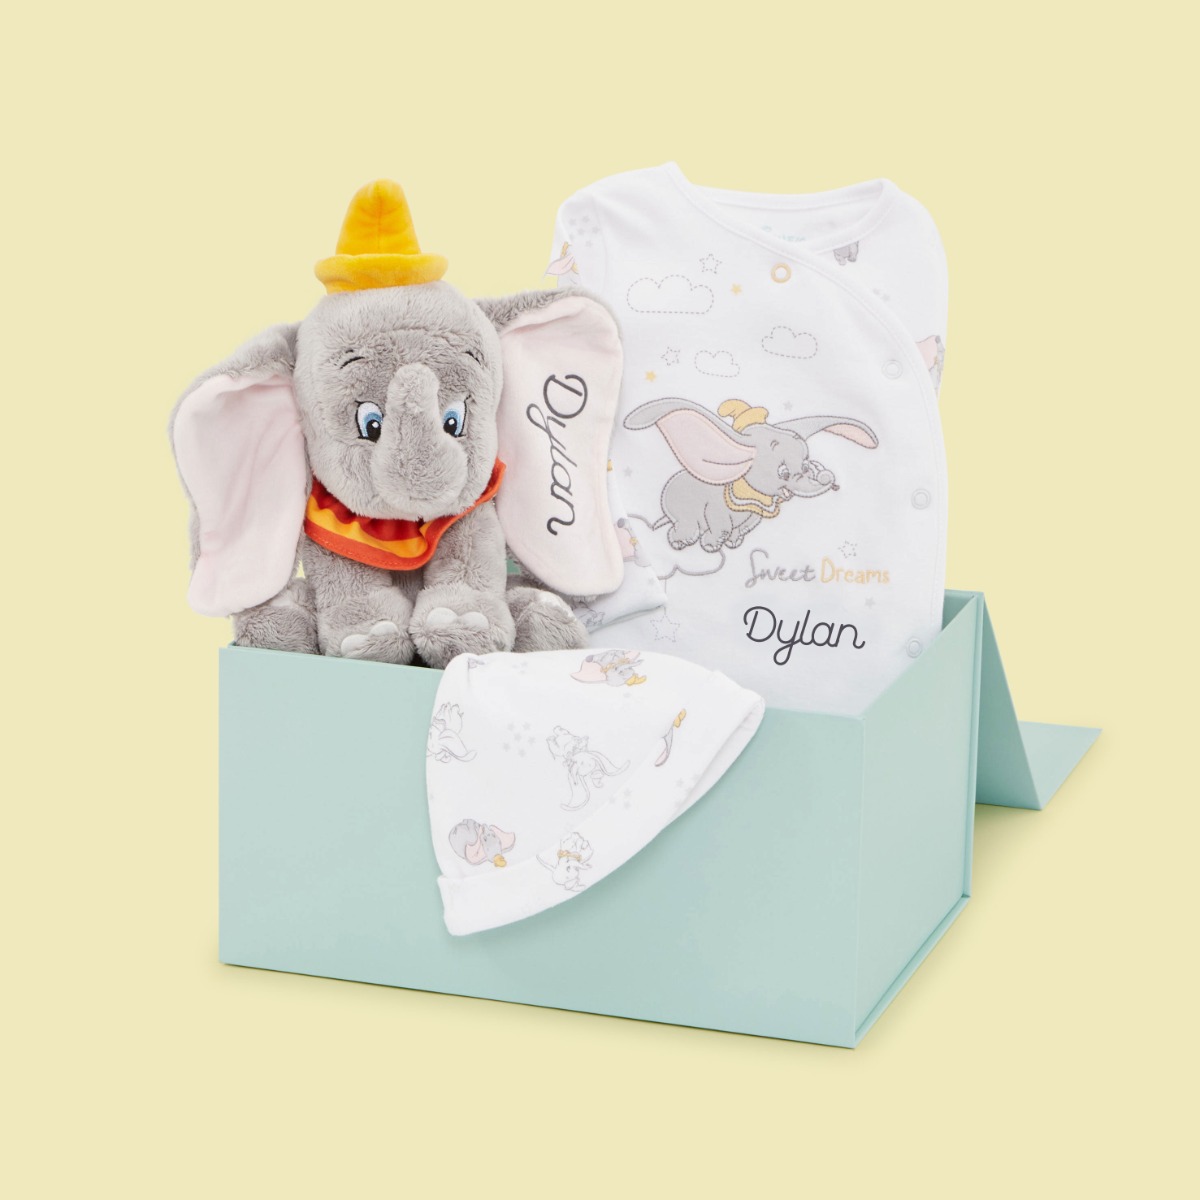 Personalised Dumbo Sleepwear & Soft Toy Gift Set